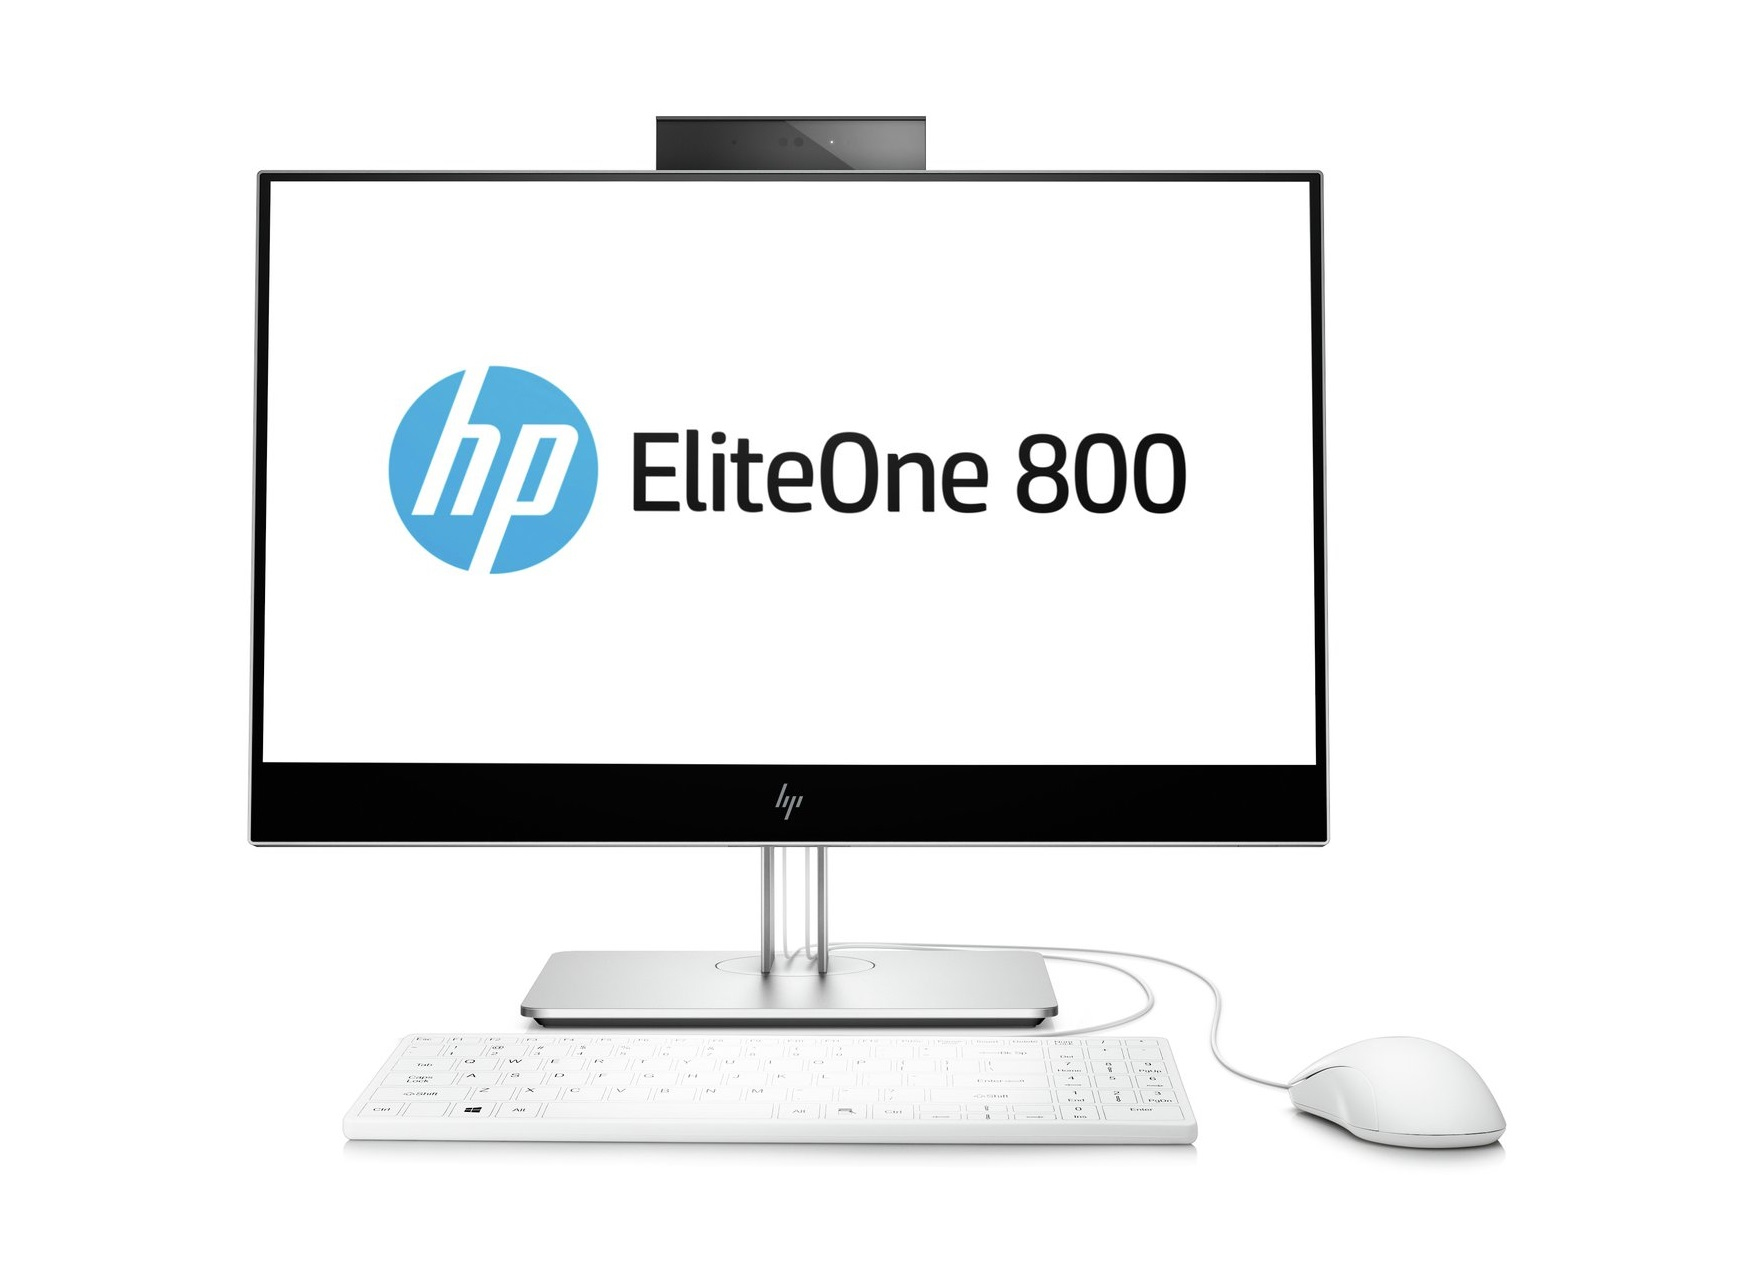 HP EliteOne 800 G3 + Parrot Disco drone